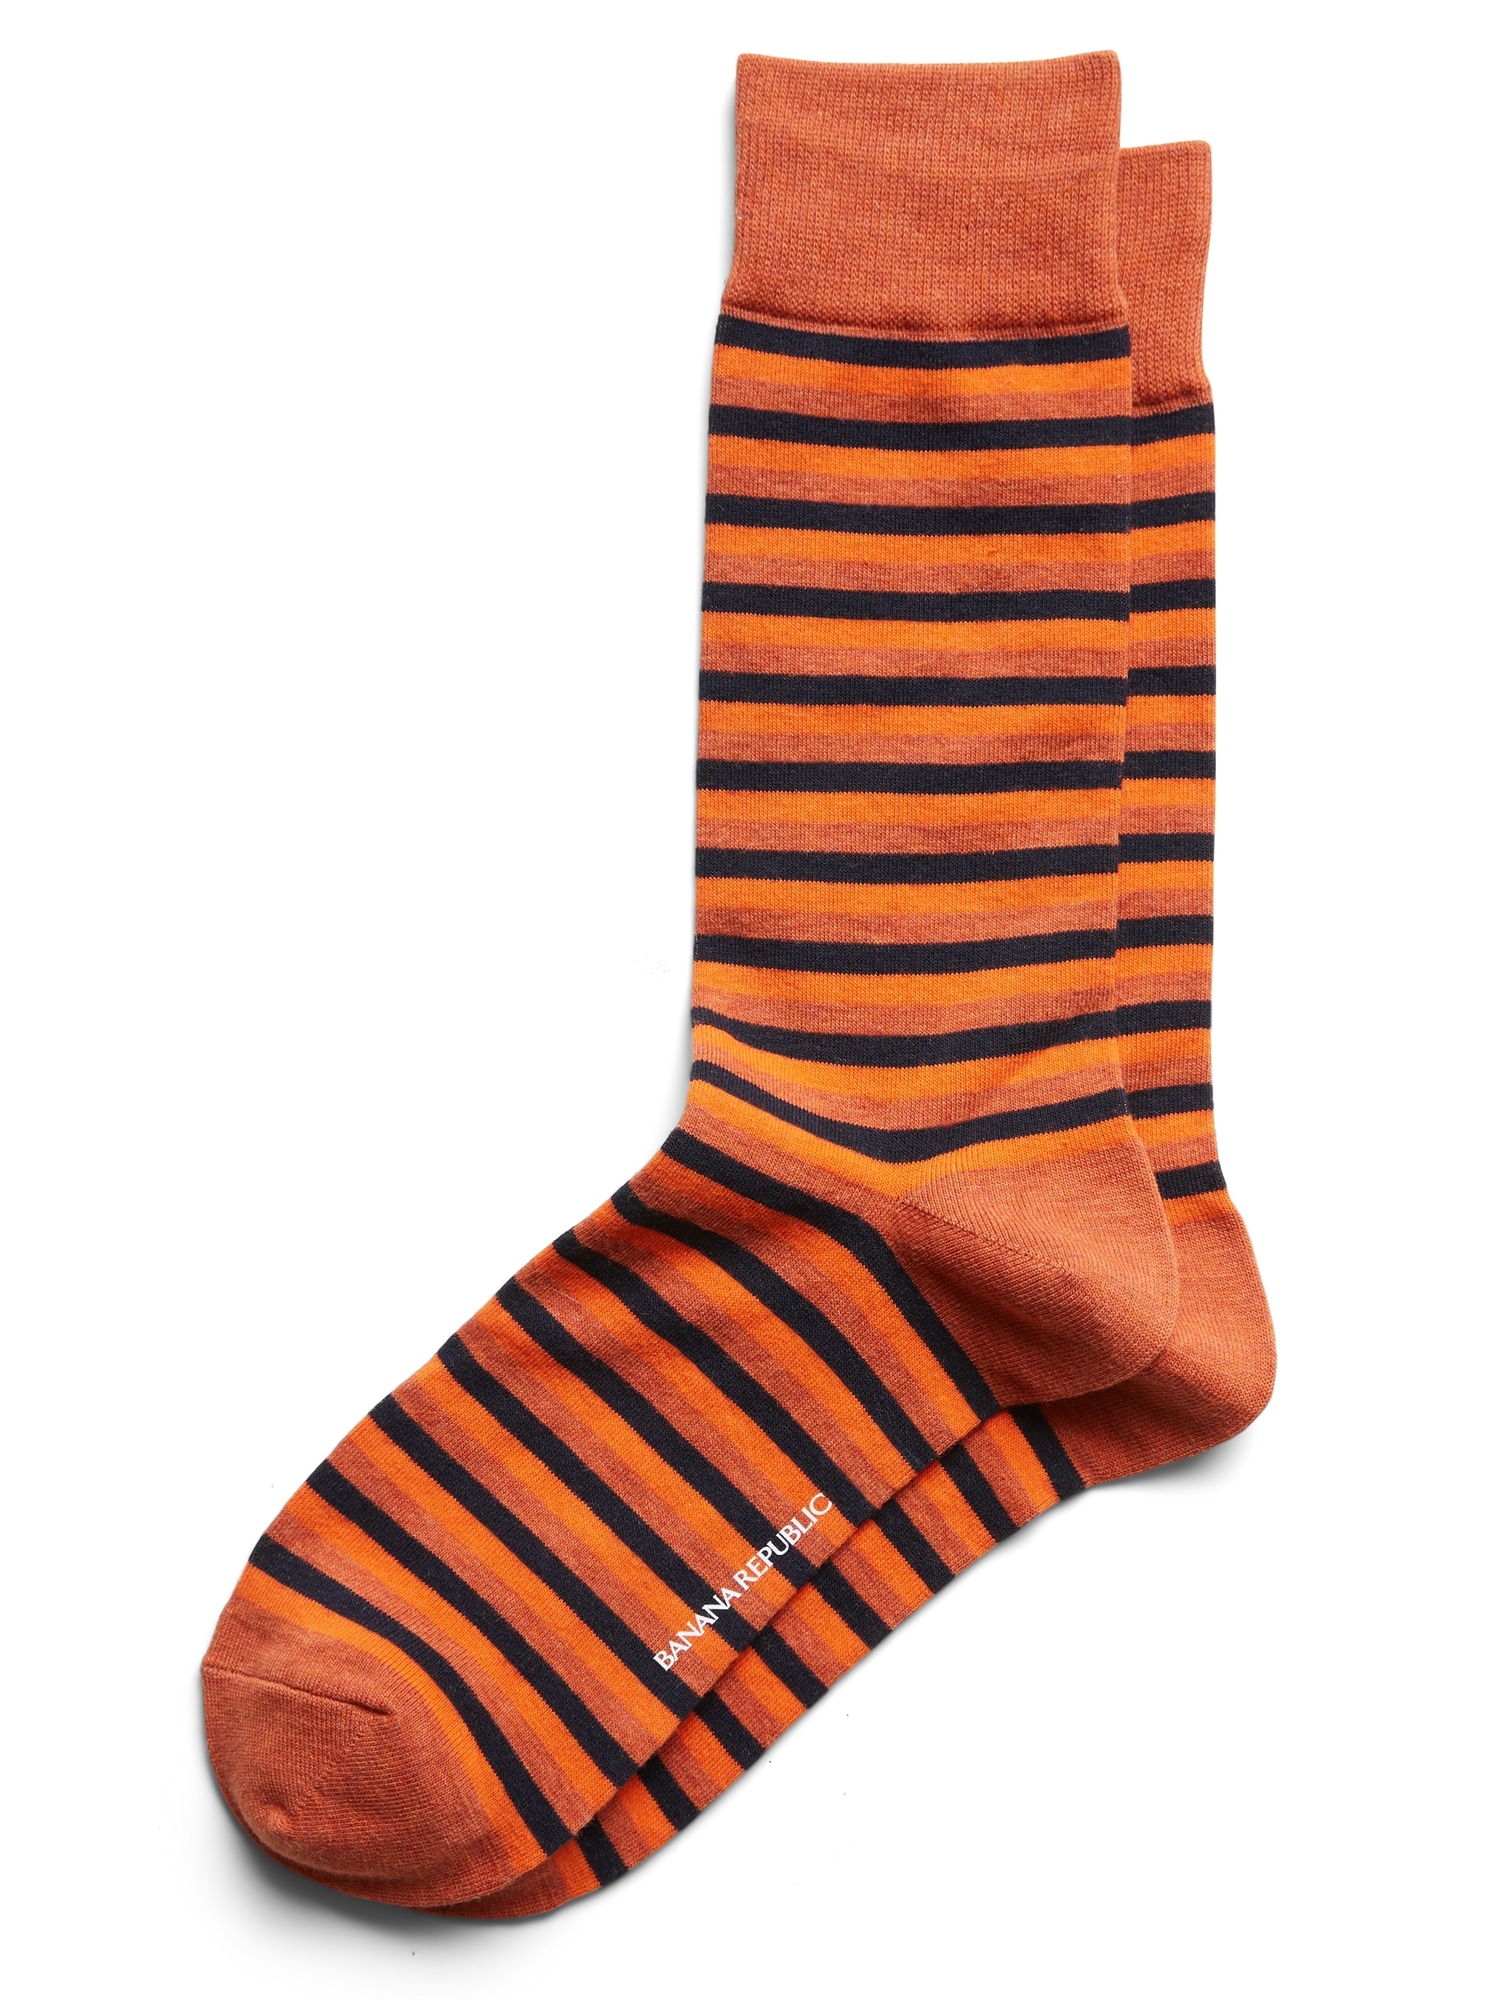 Three Color Stripe Sock